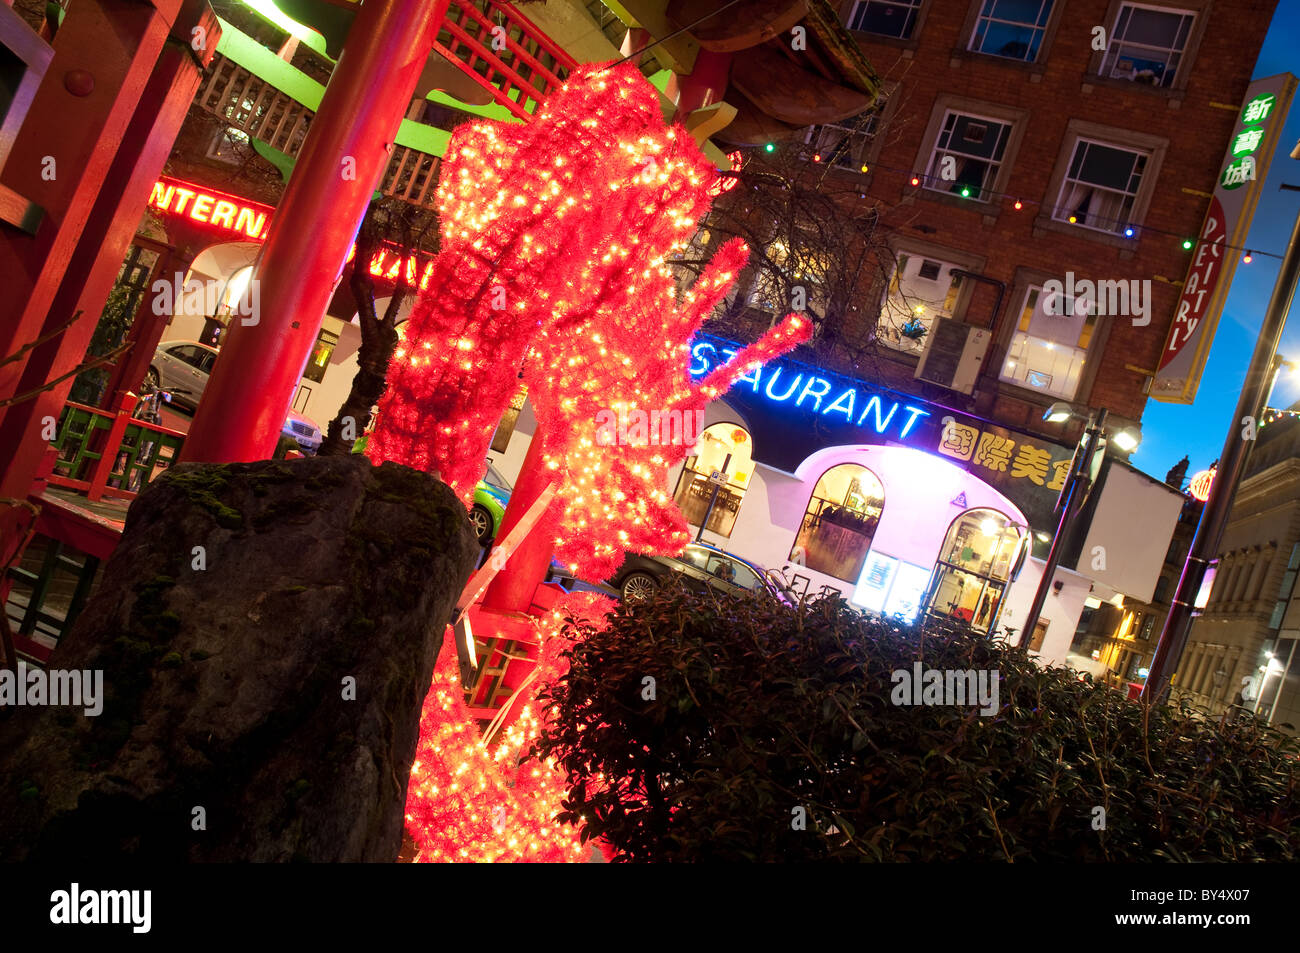 Illuminated red dragon,China Town,Manchester Stock Photo